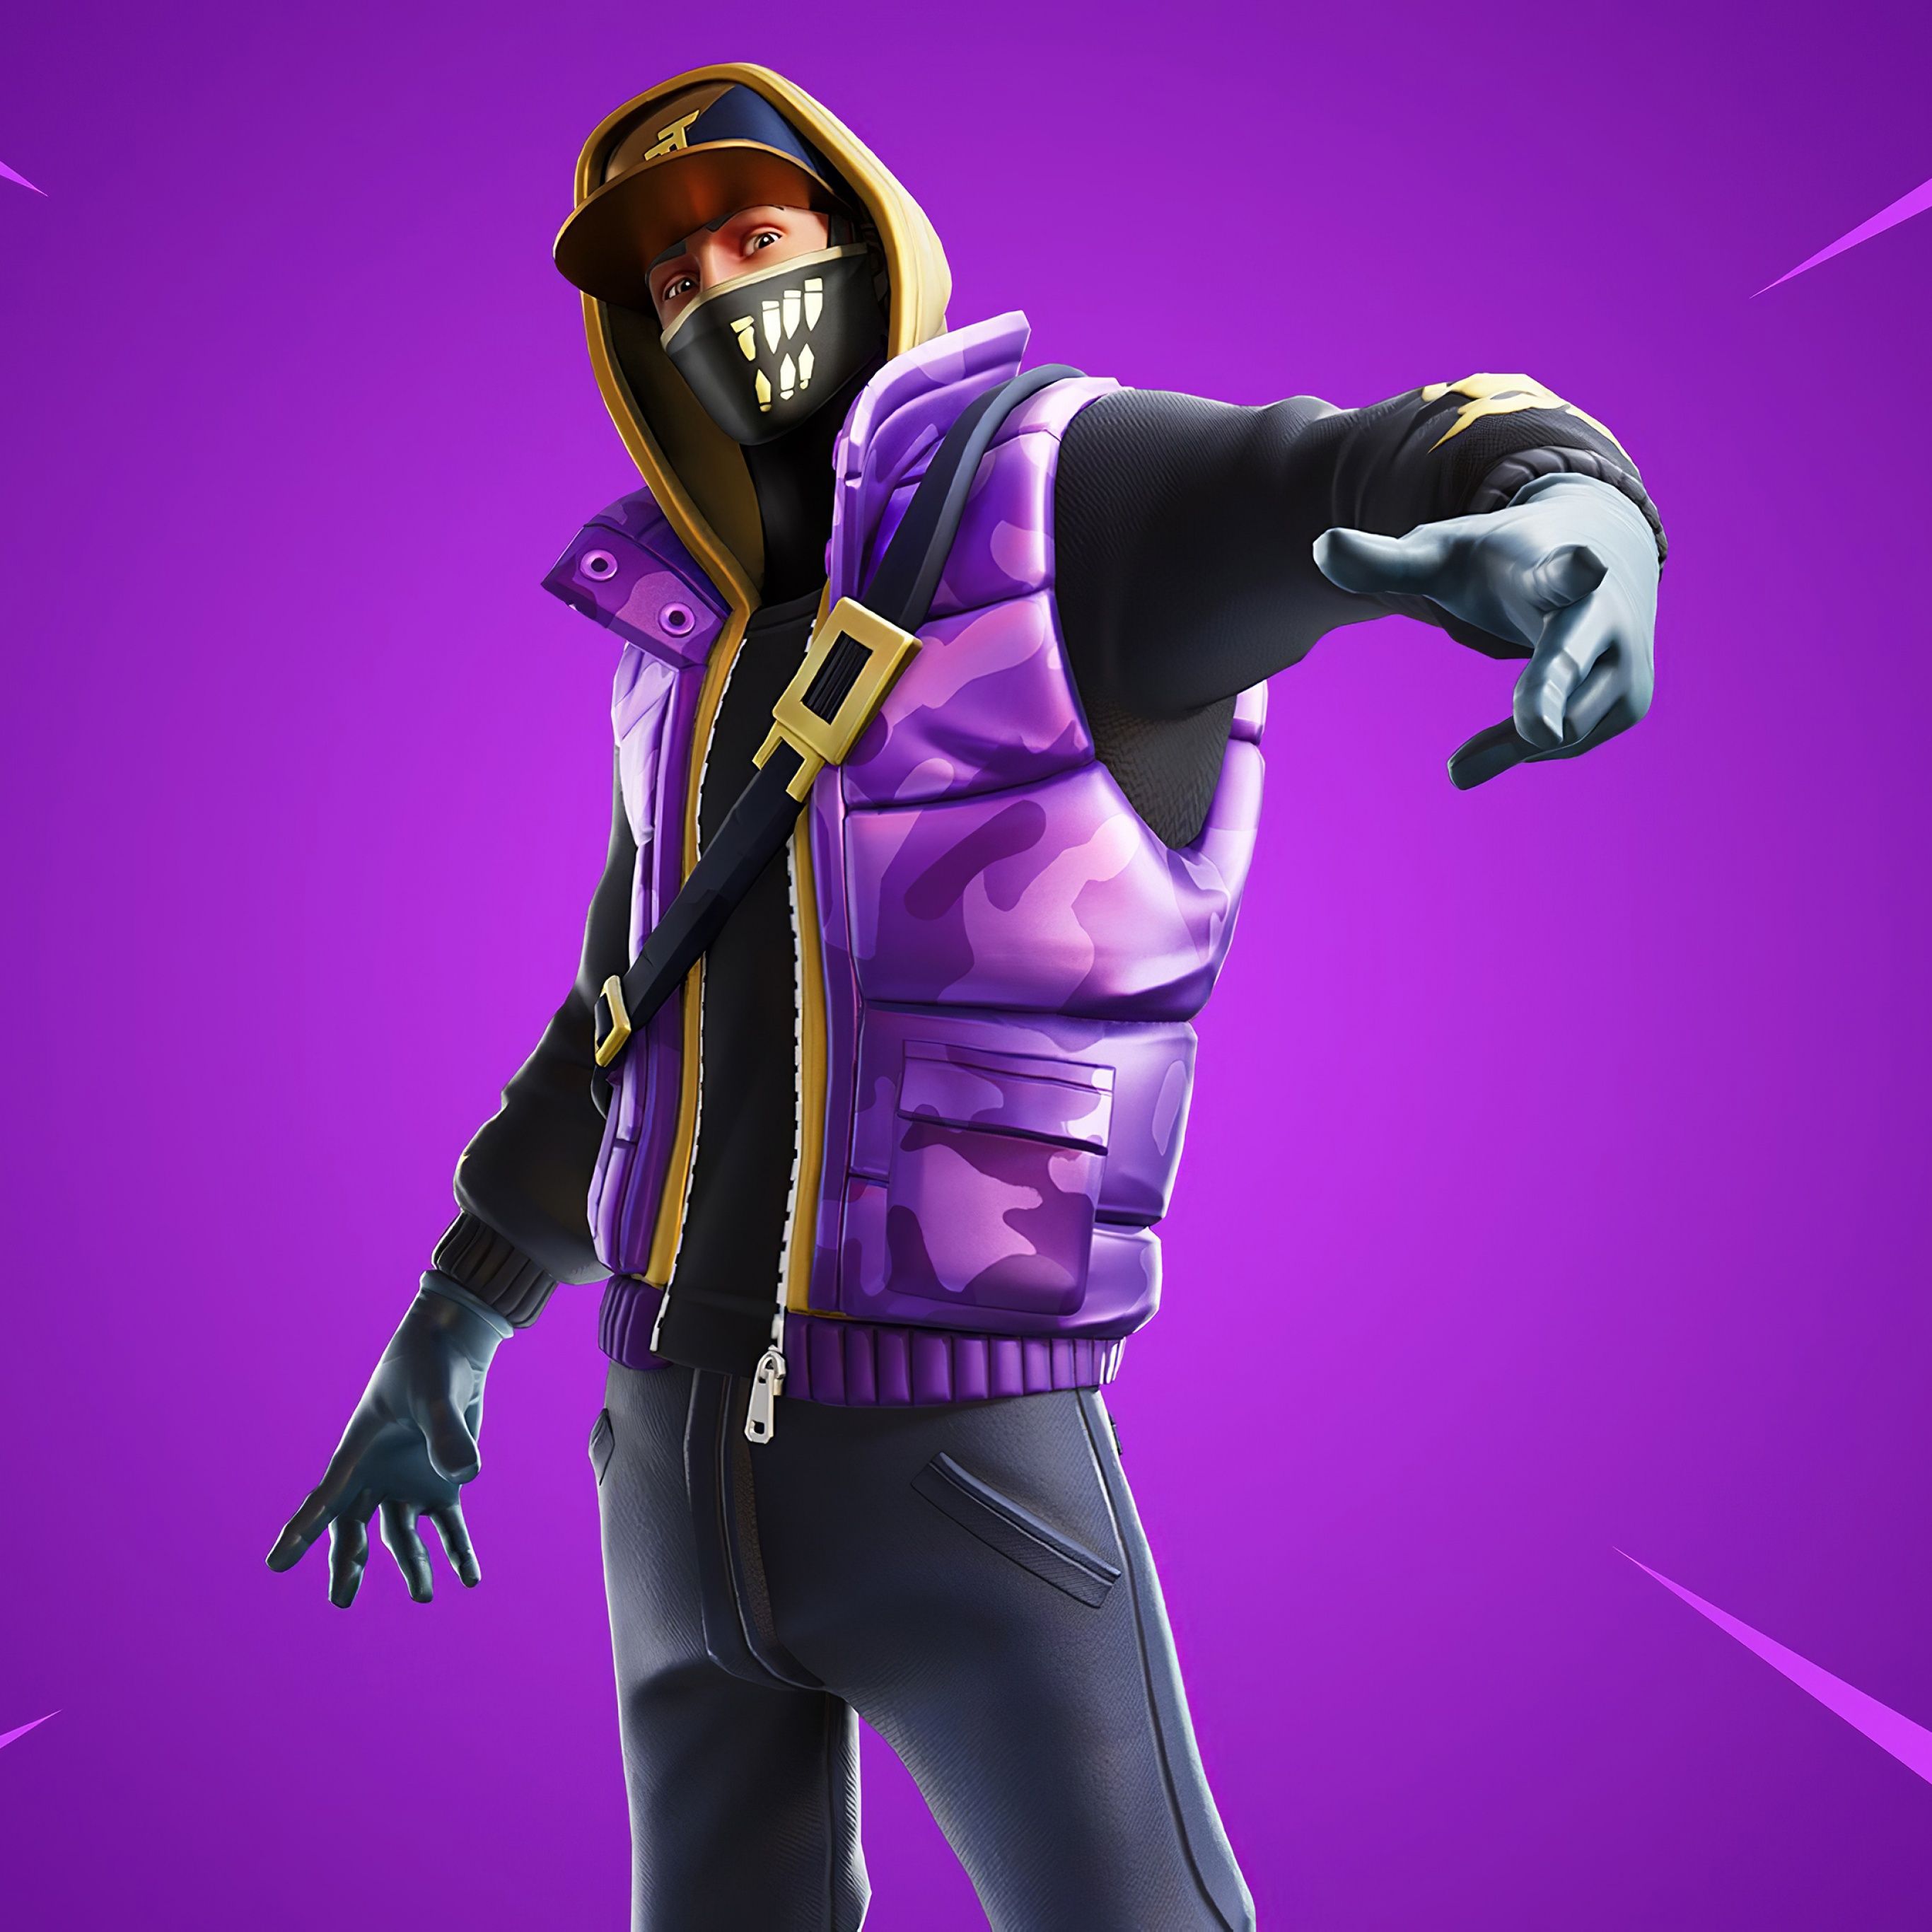 A Fortnite character in a purple jacket and black shirt. - Fortnite